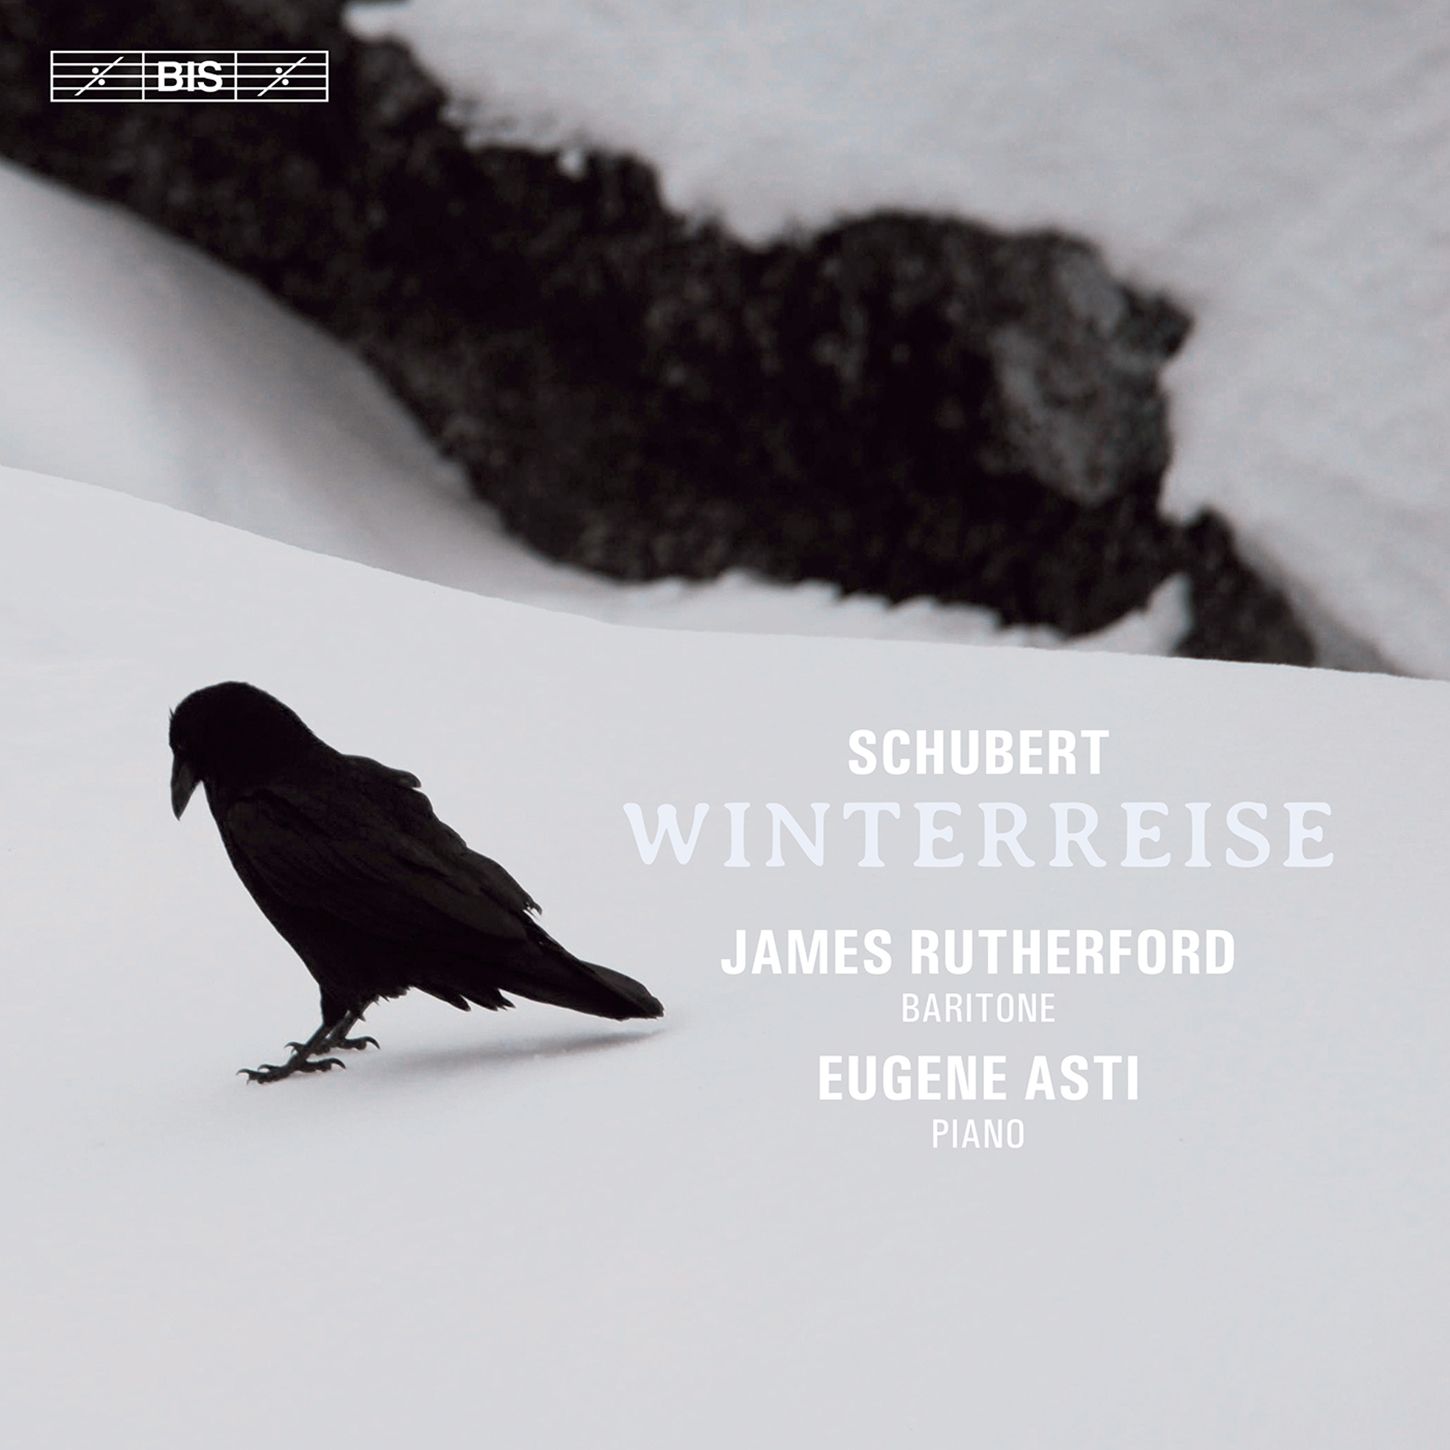 Daring Schubert's Winter Journey: James Rutherford & Eugene Asti on BIS